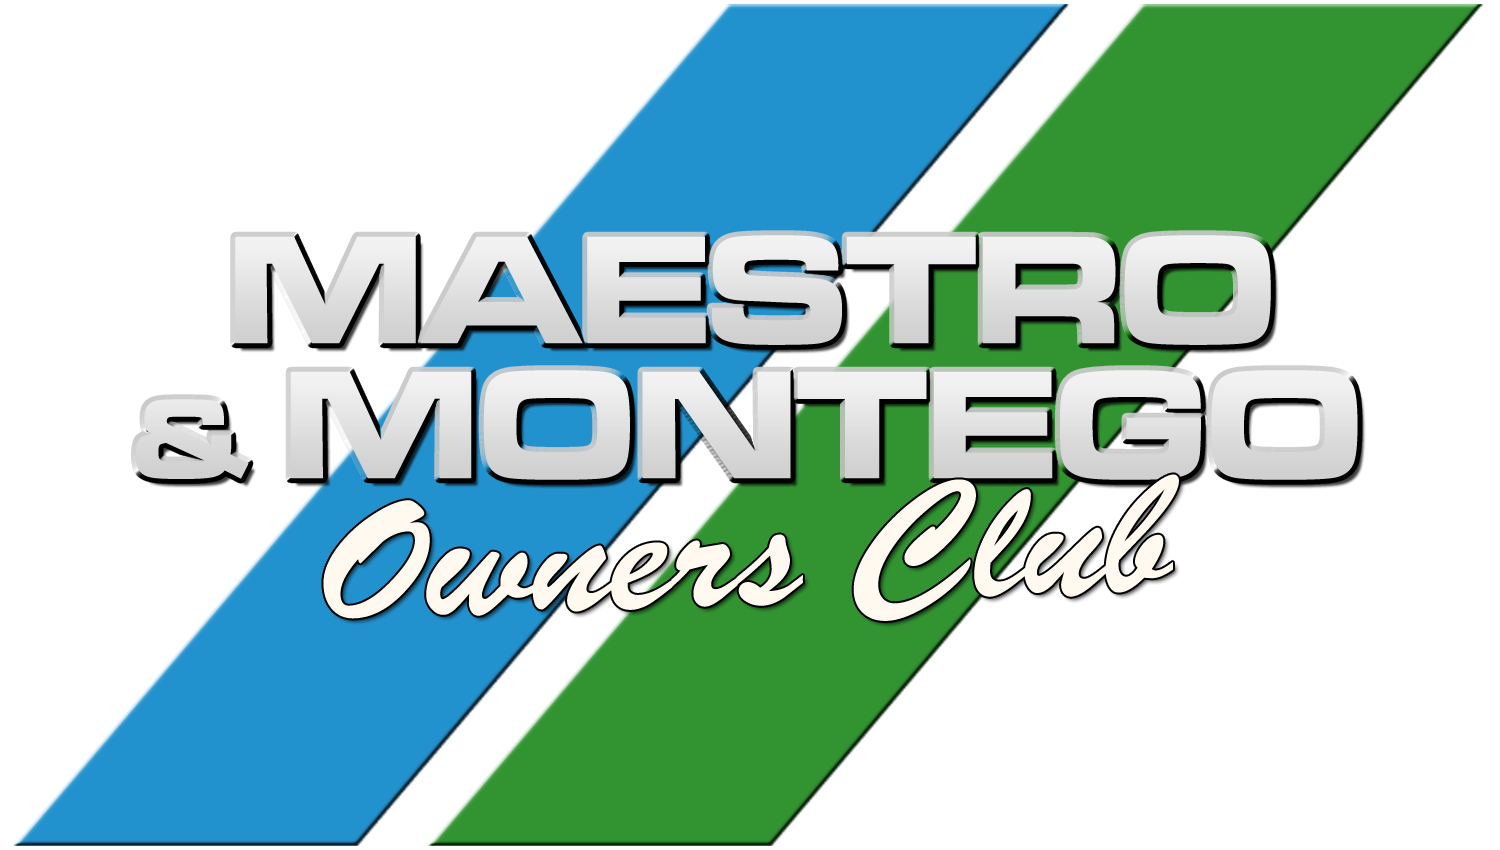 Maestro & Montego Owners Club